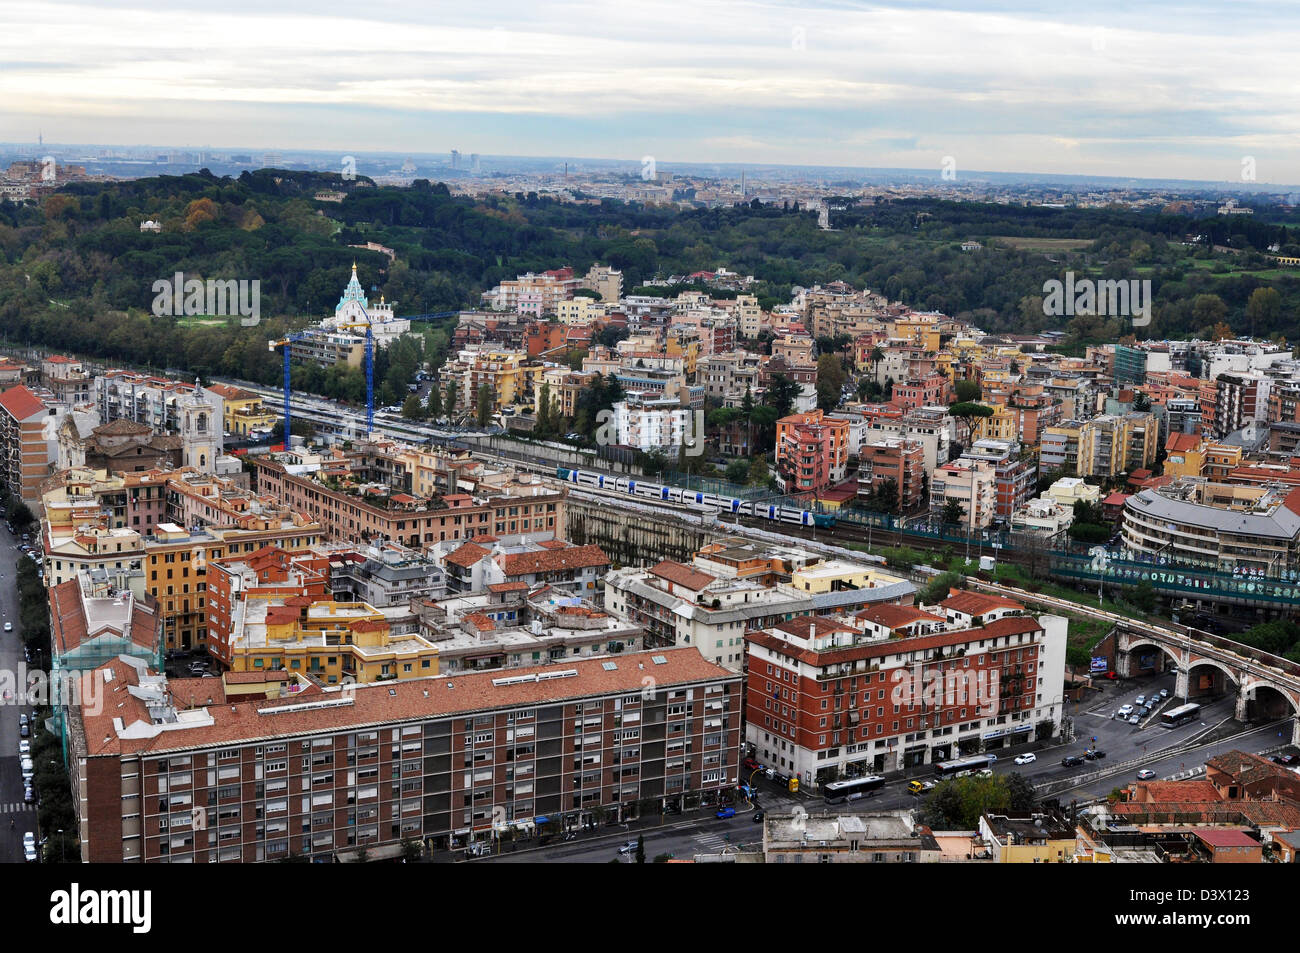 View across Rome from St Peter's Basilica towards the Via di Villa Spada, train station. Stock Photo